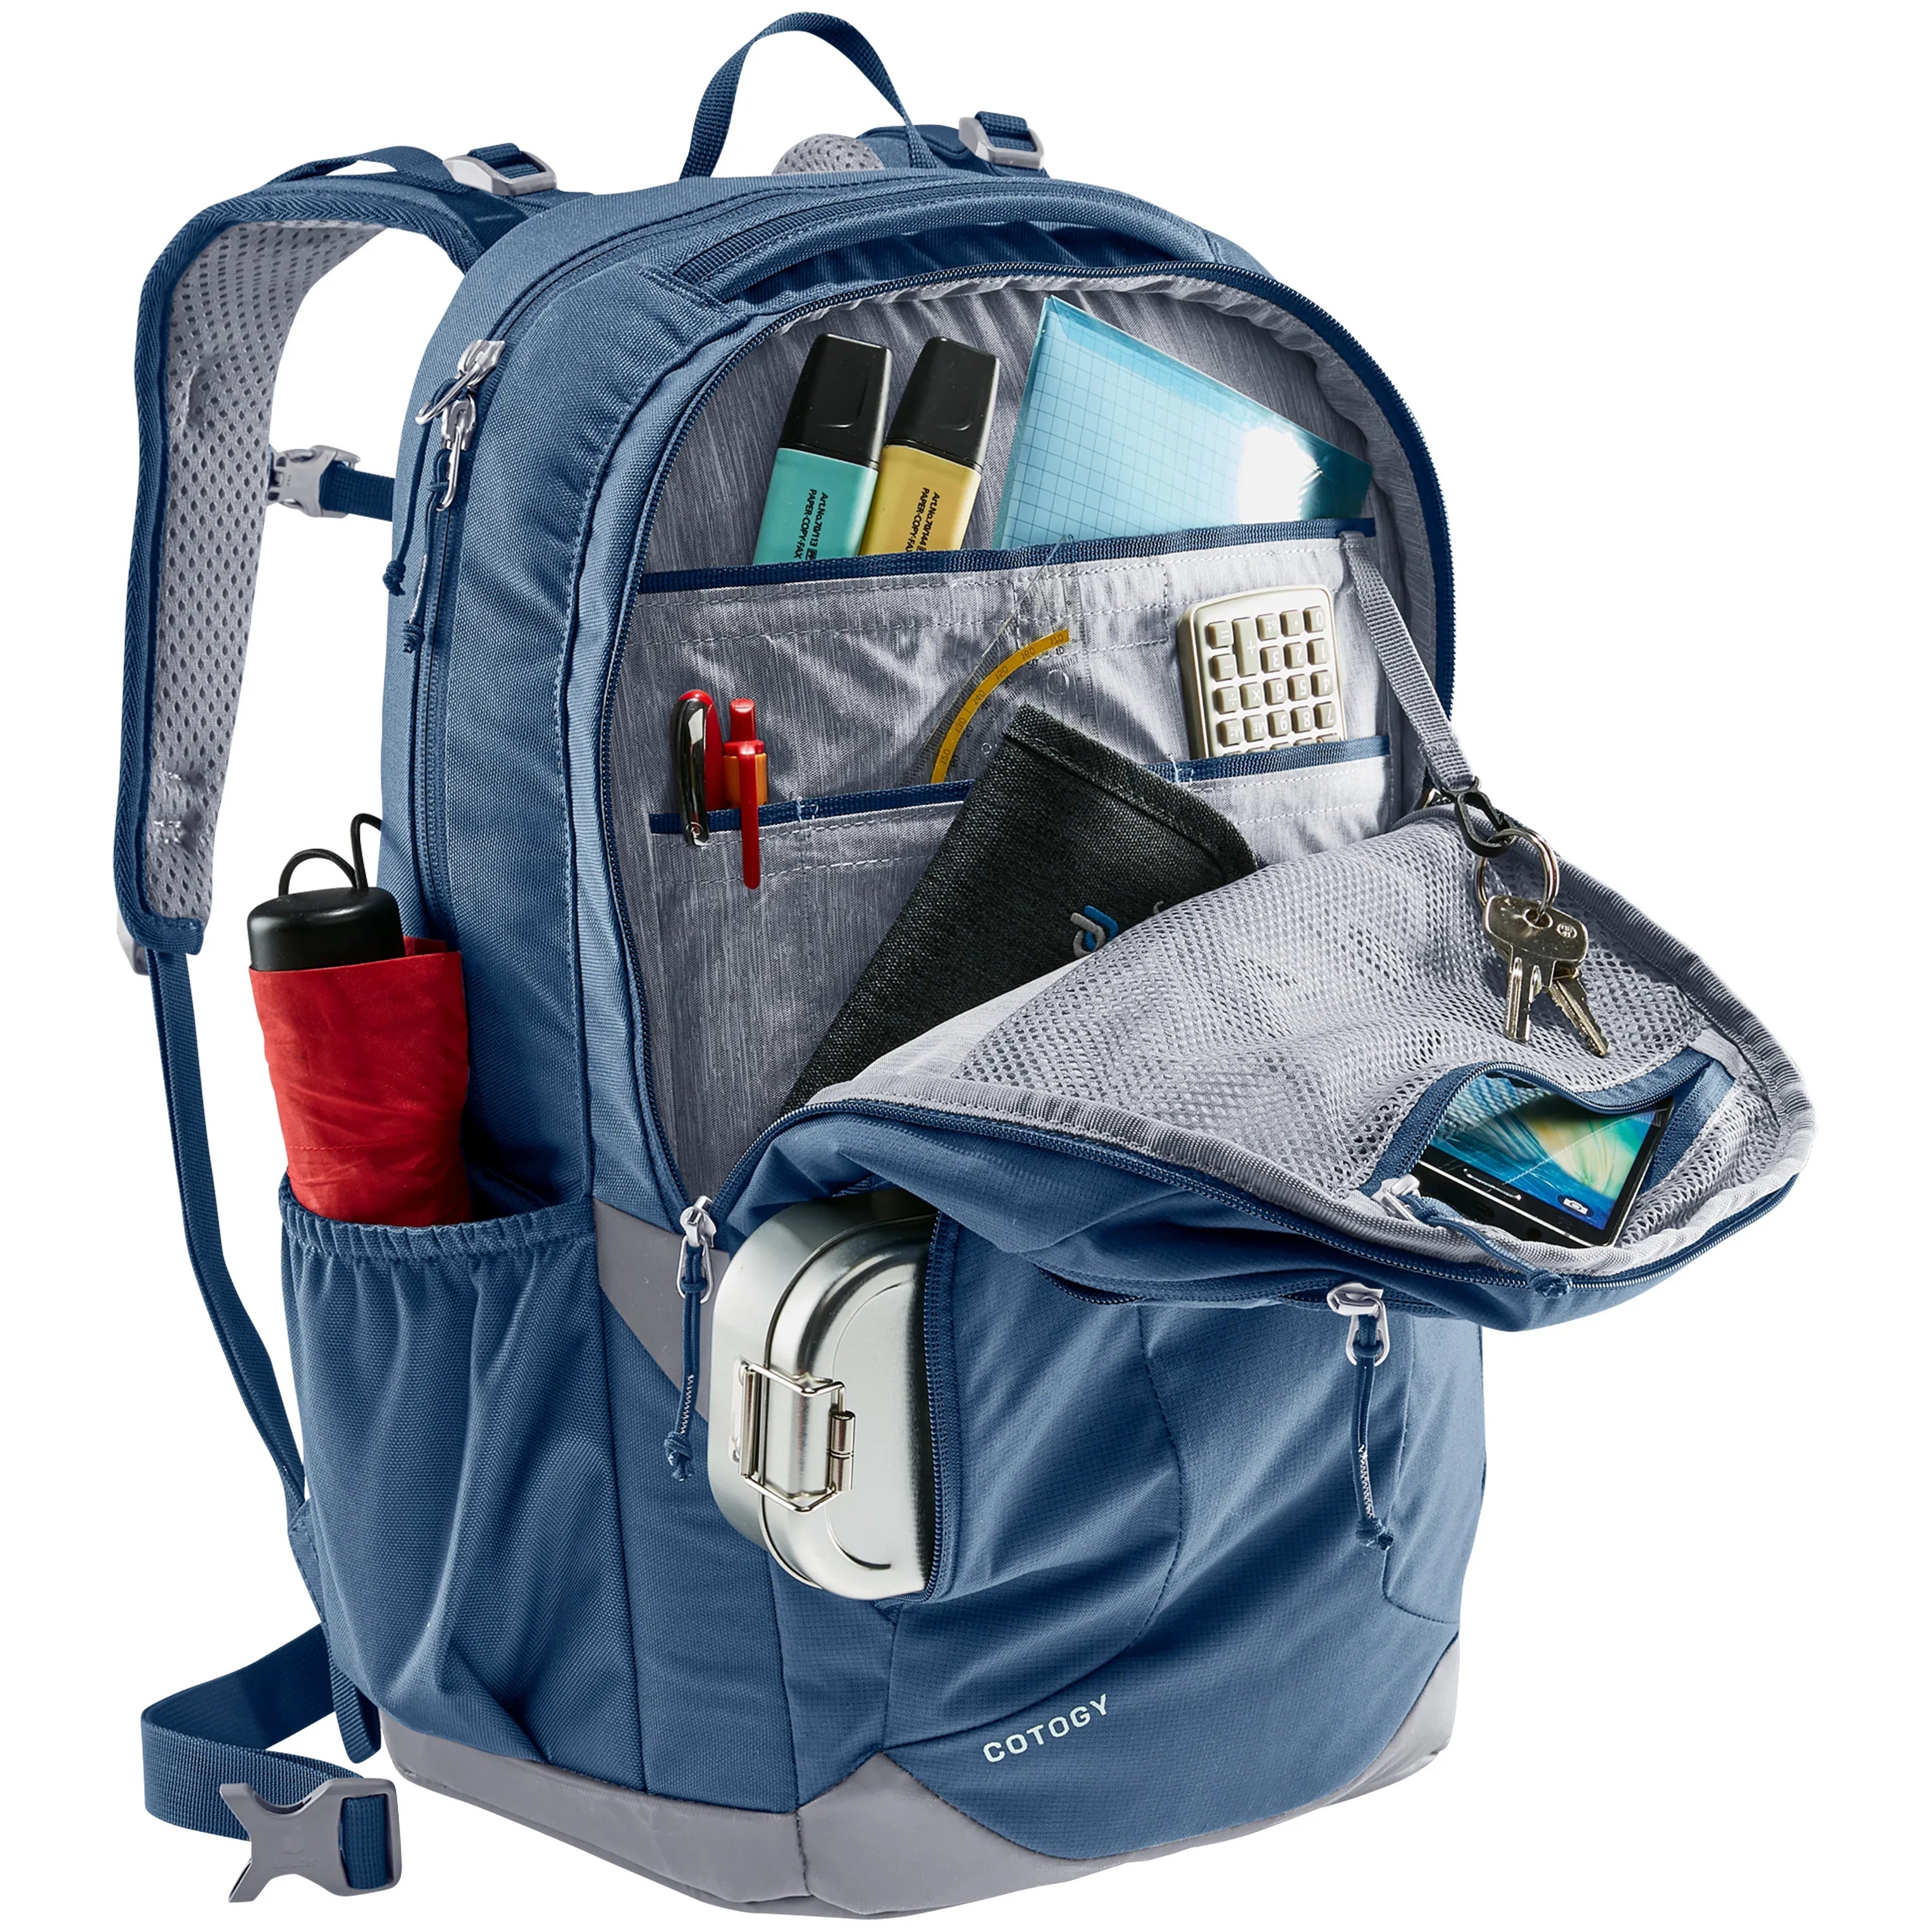 Deuter Daypack Cotogy school backpack 46 cm - Teal